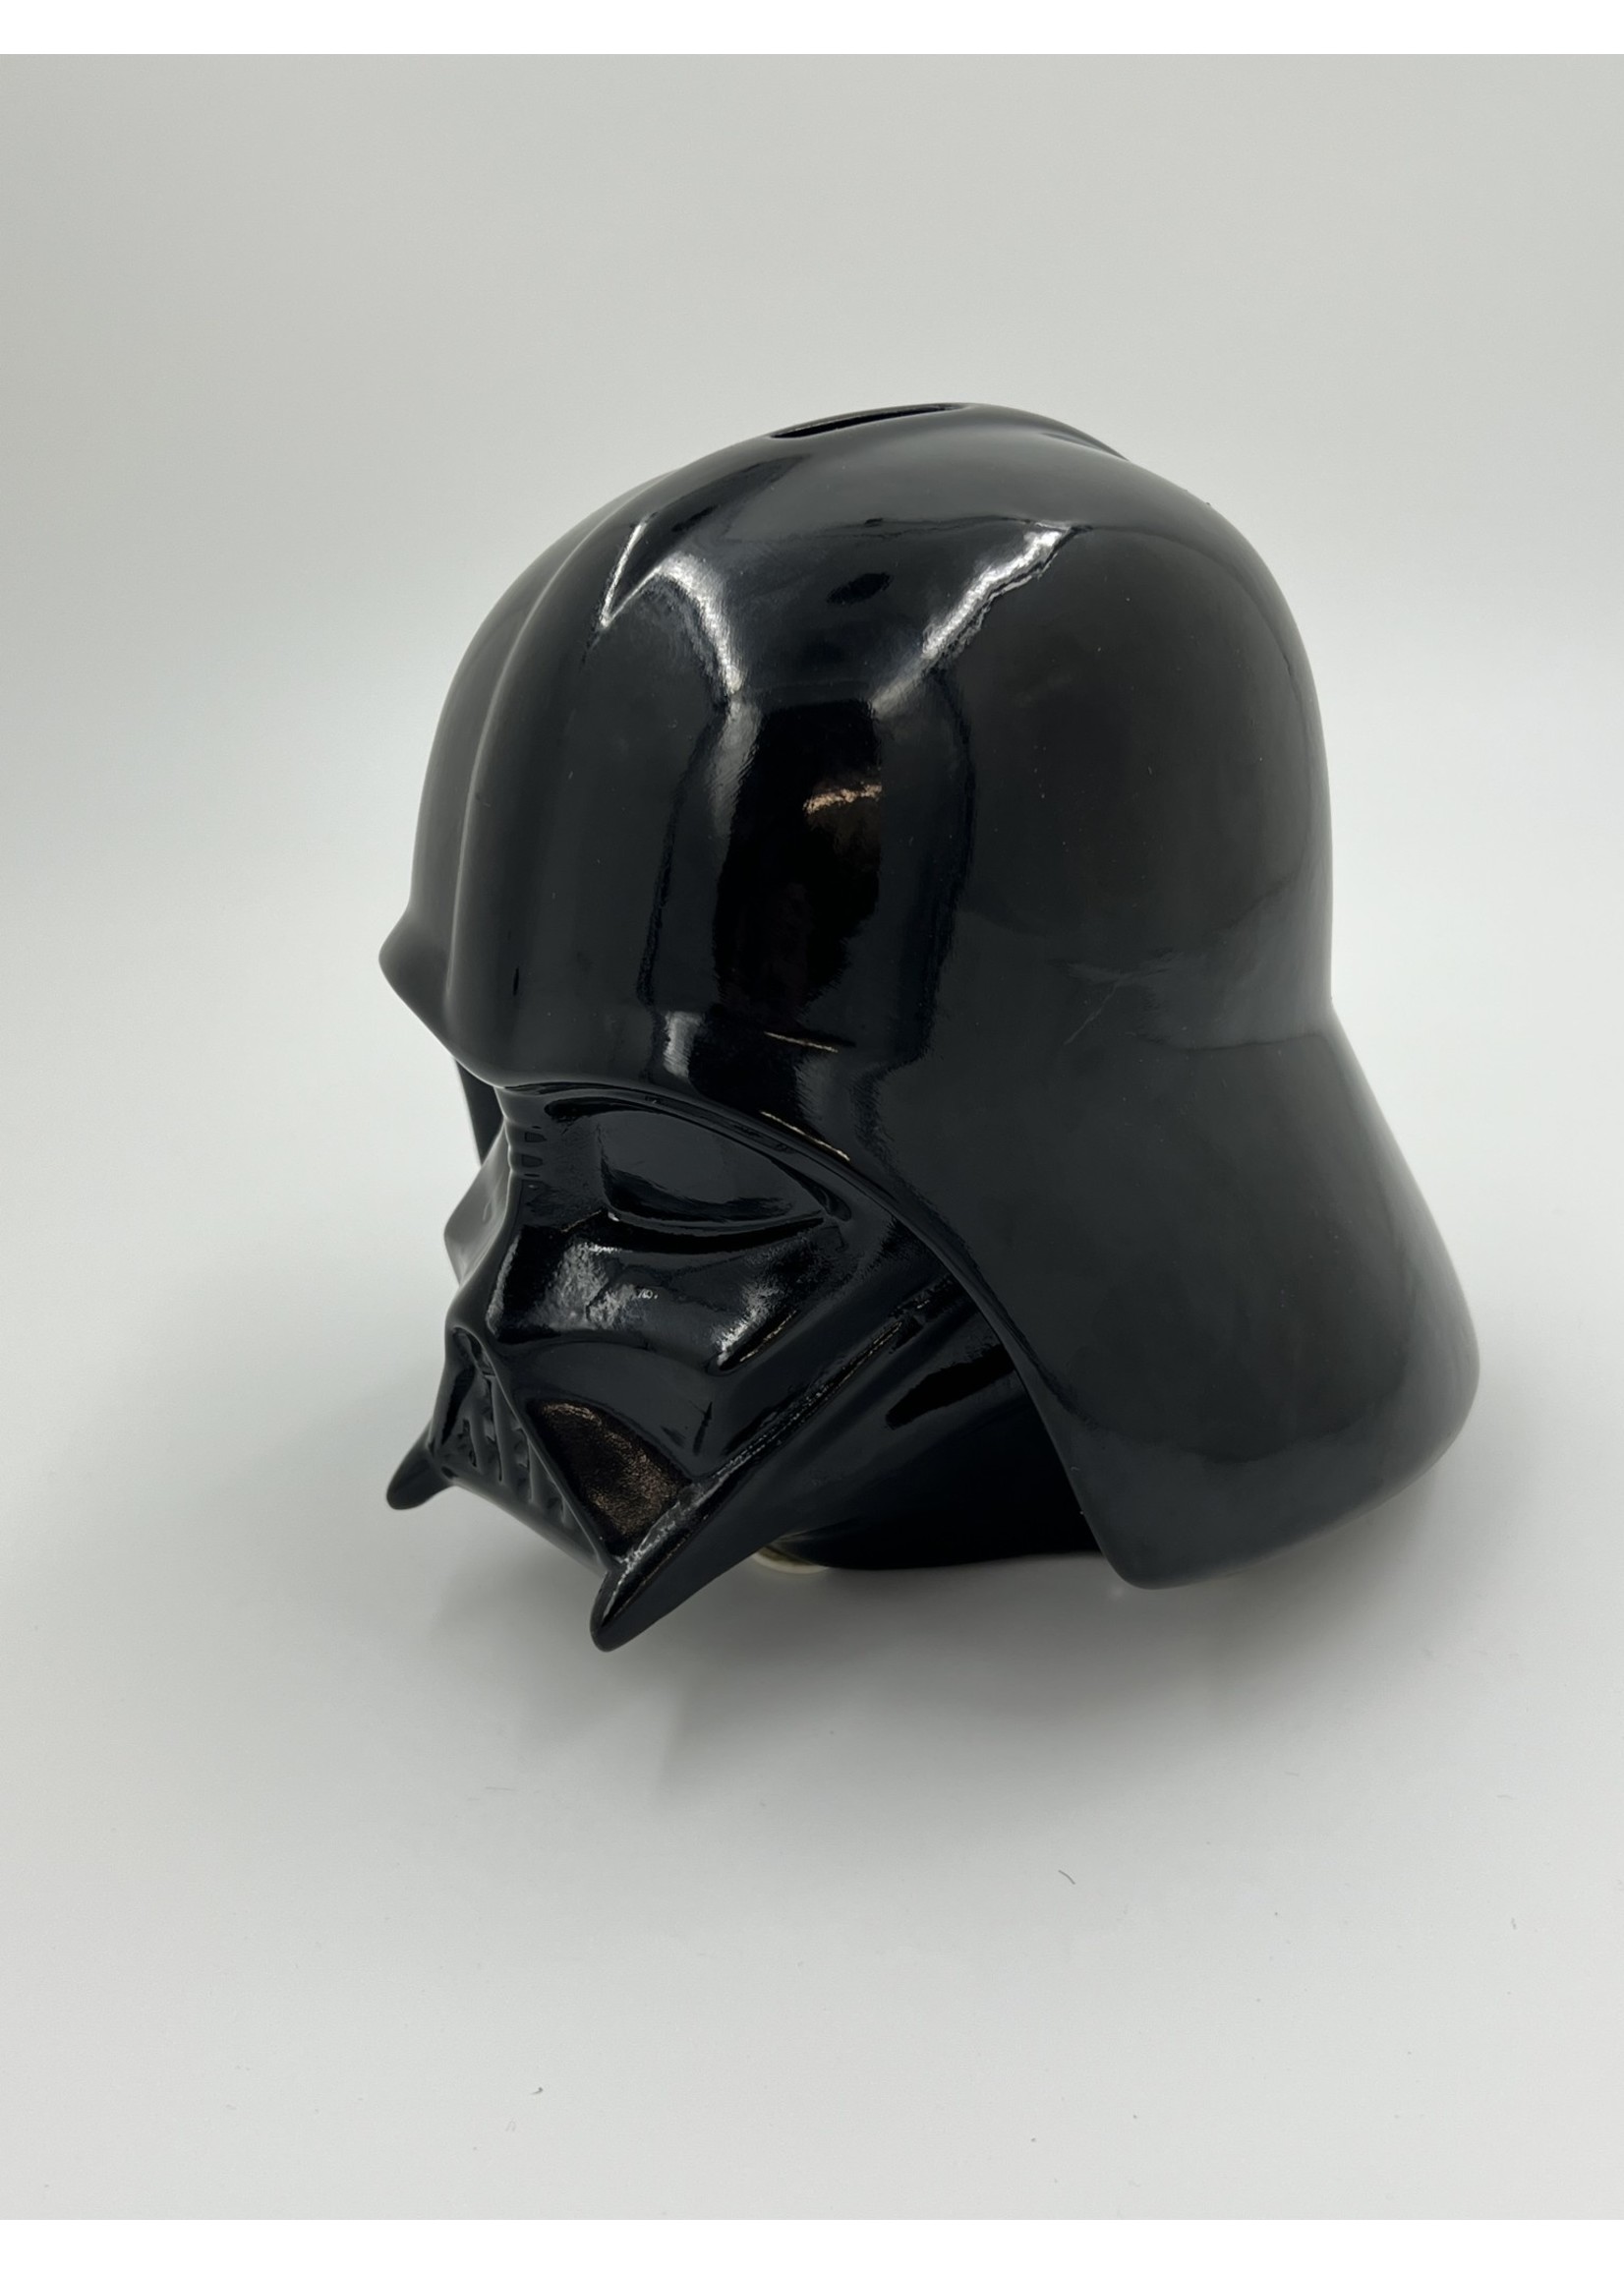 Other Things Darth Vader Ceramic Bank